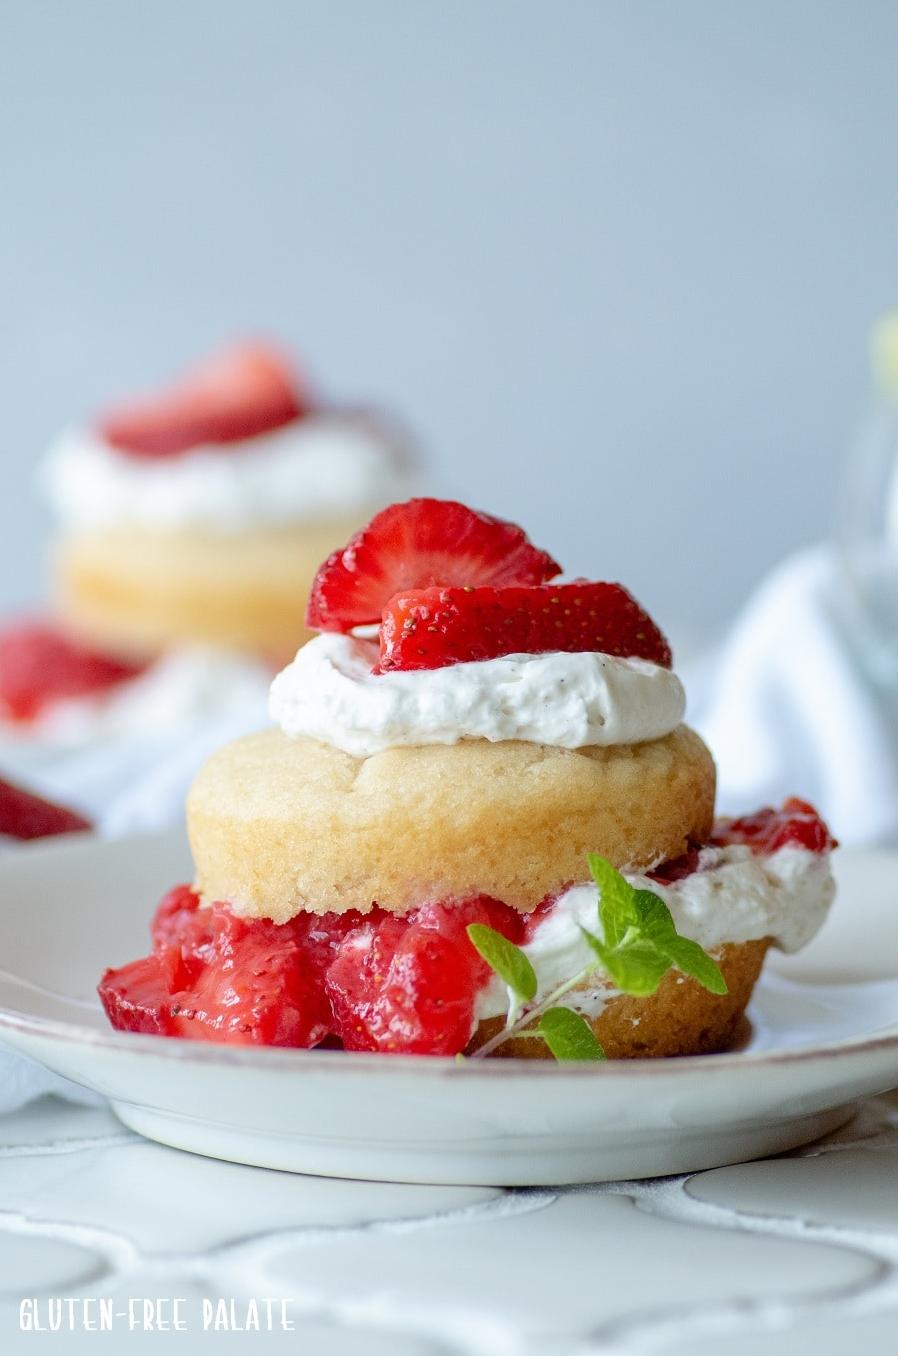  Sweet strawberries meet almond flour in this gluten-free and low-sugar dessert